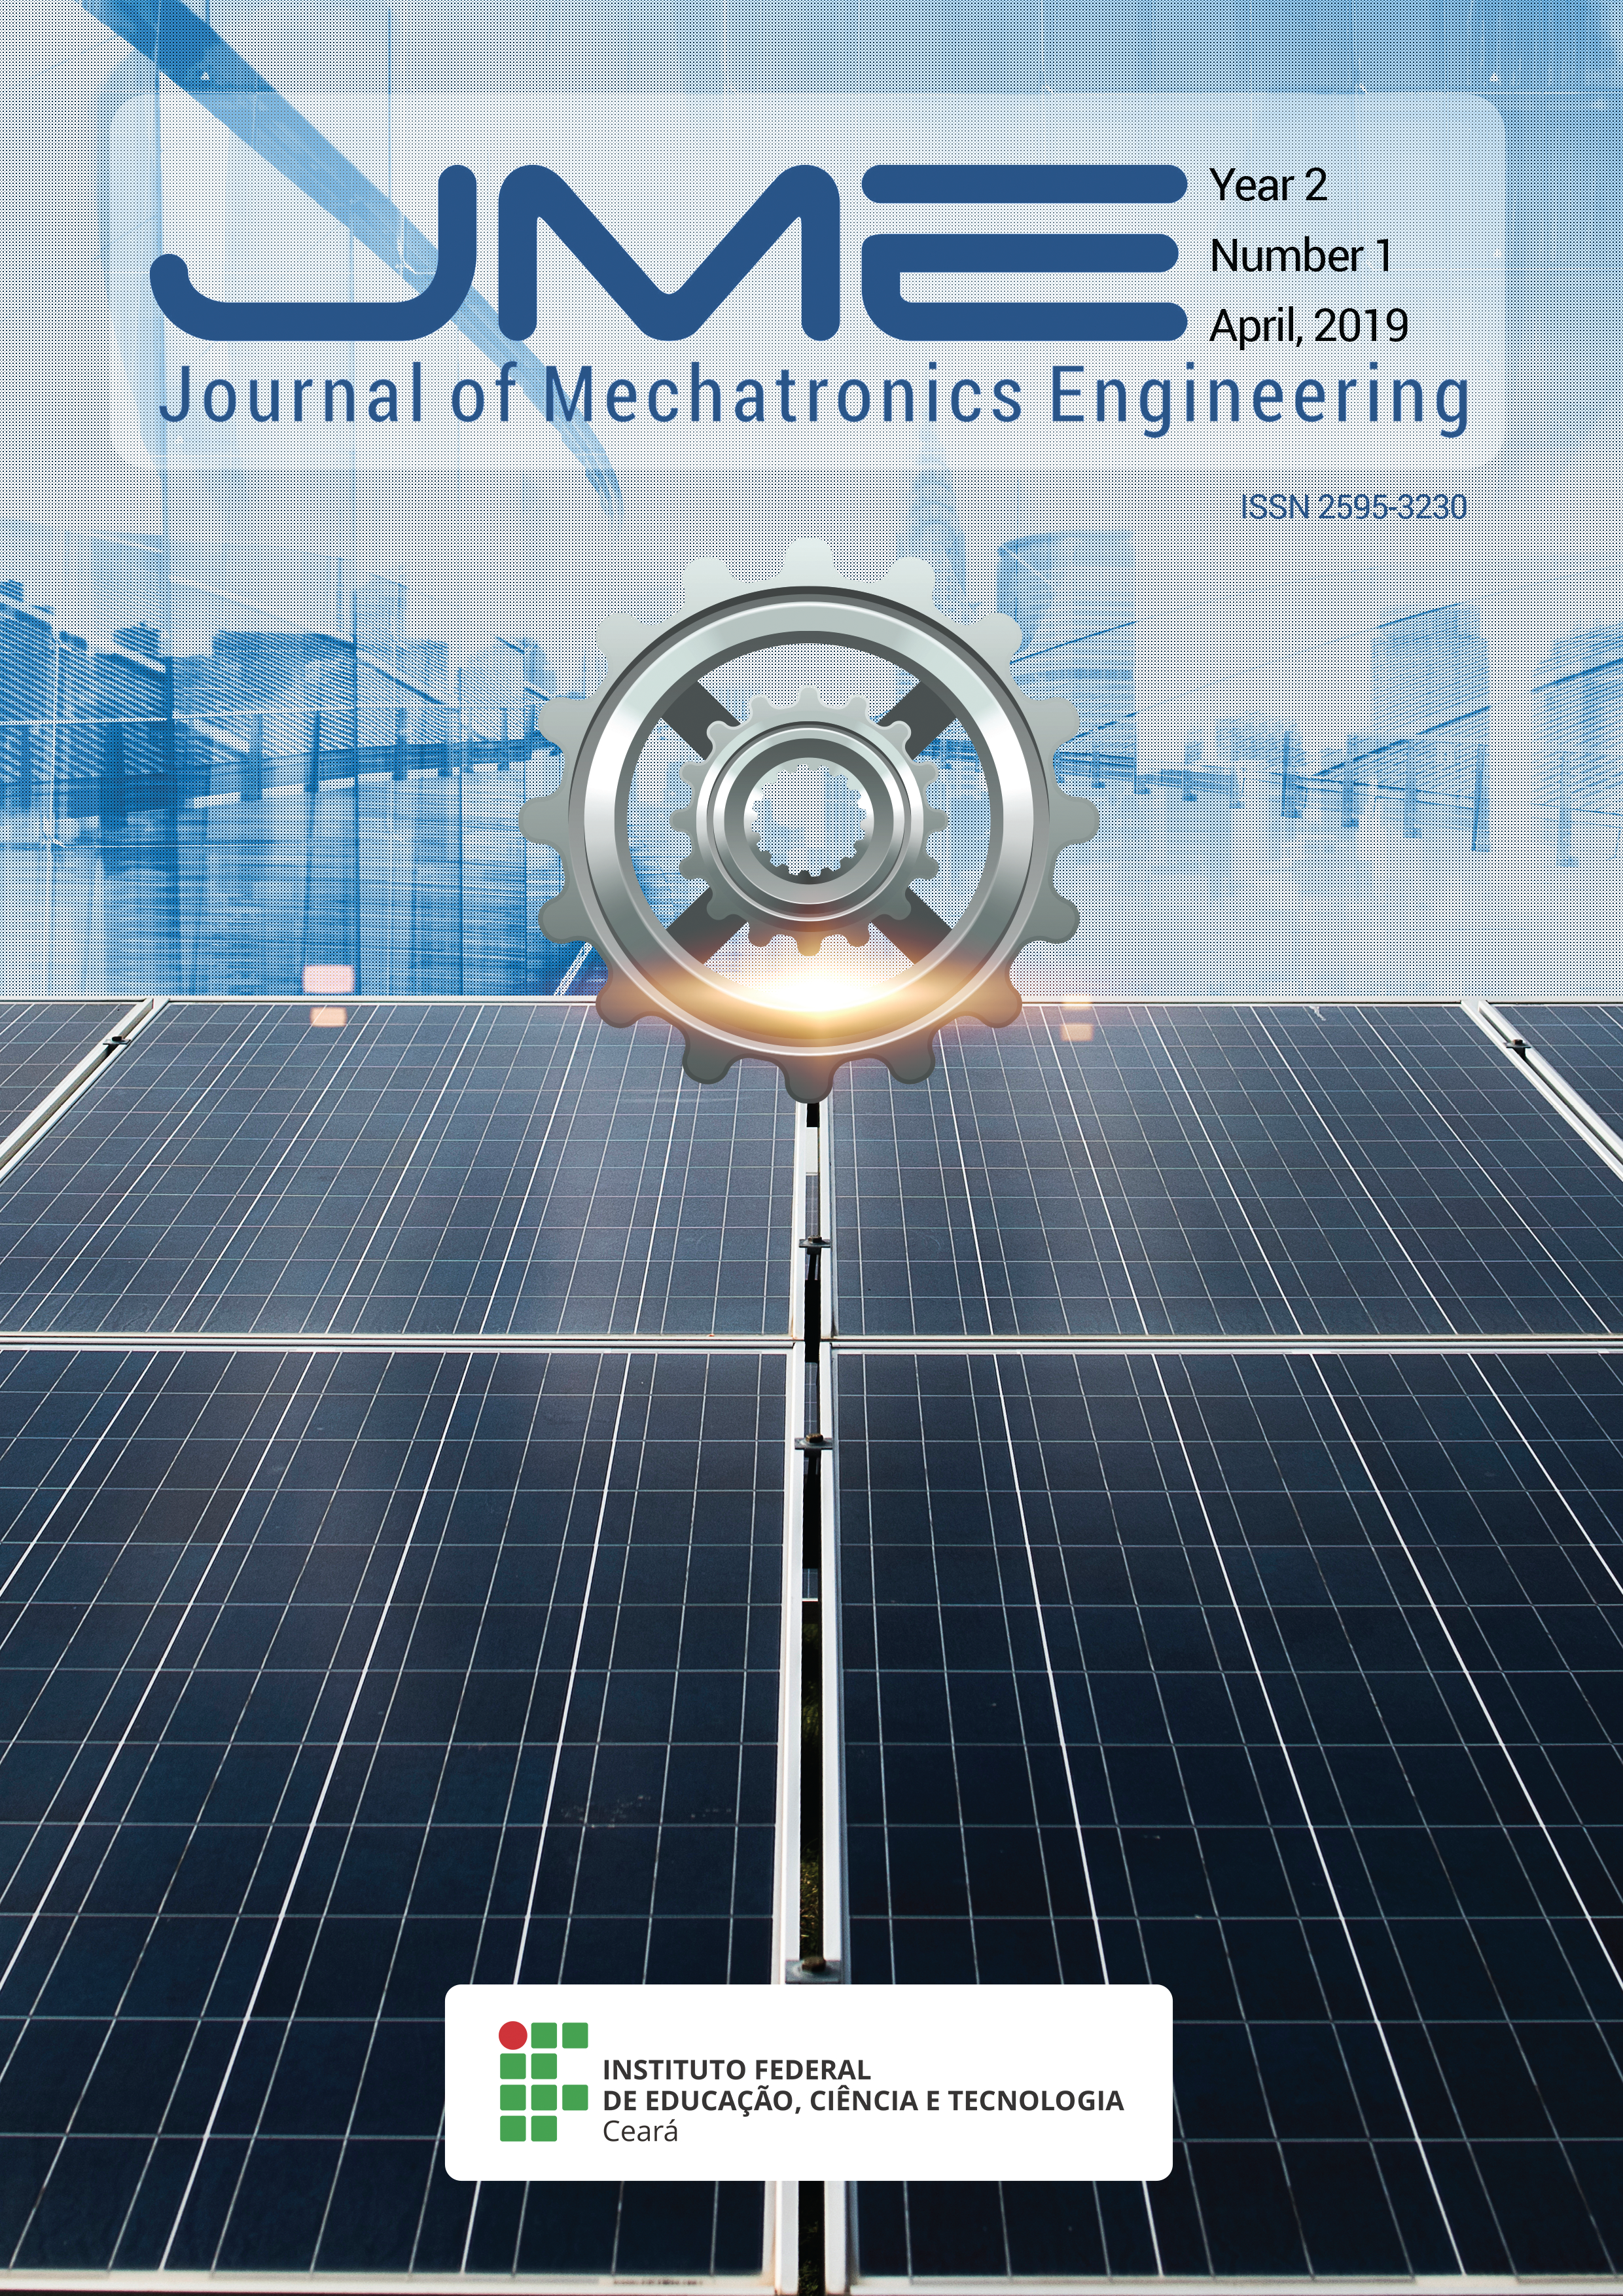 					View Vol. 2 No. 1 (2019): Journal of Mechatronics Engineering, v. 2, n. 1, April, 2019
				